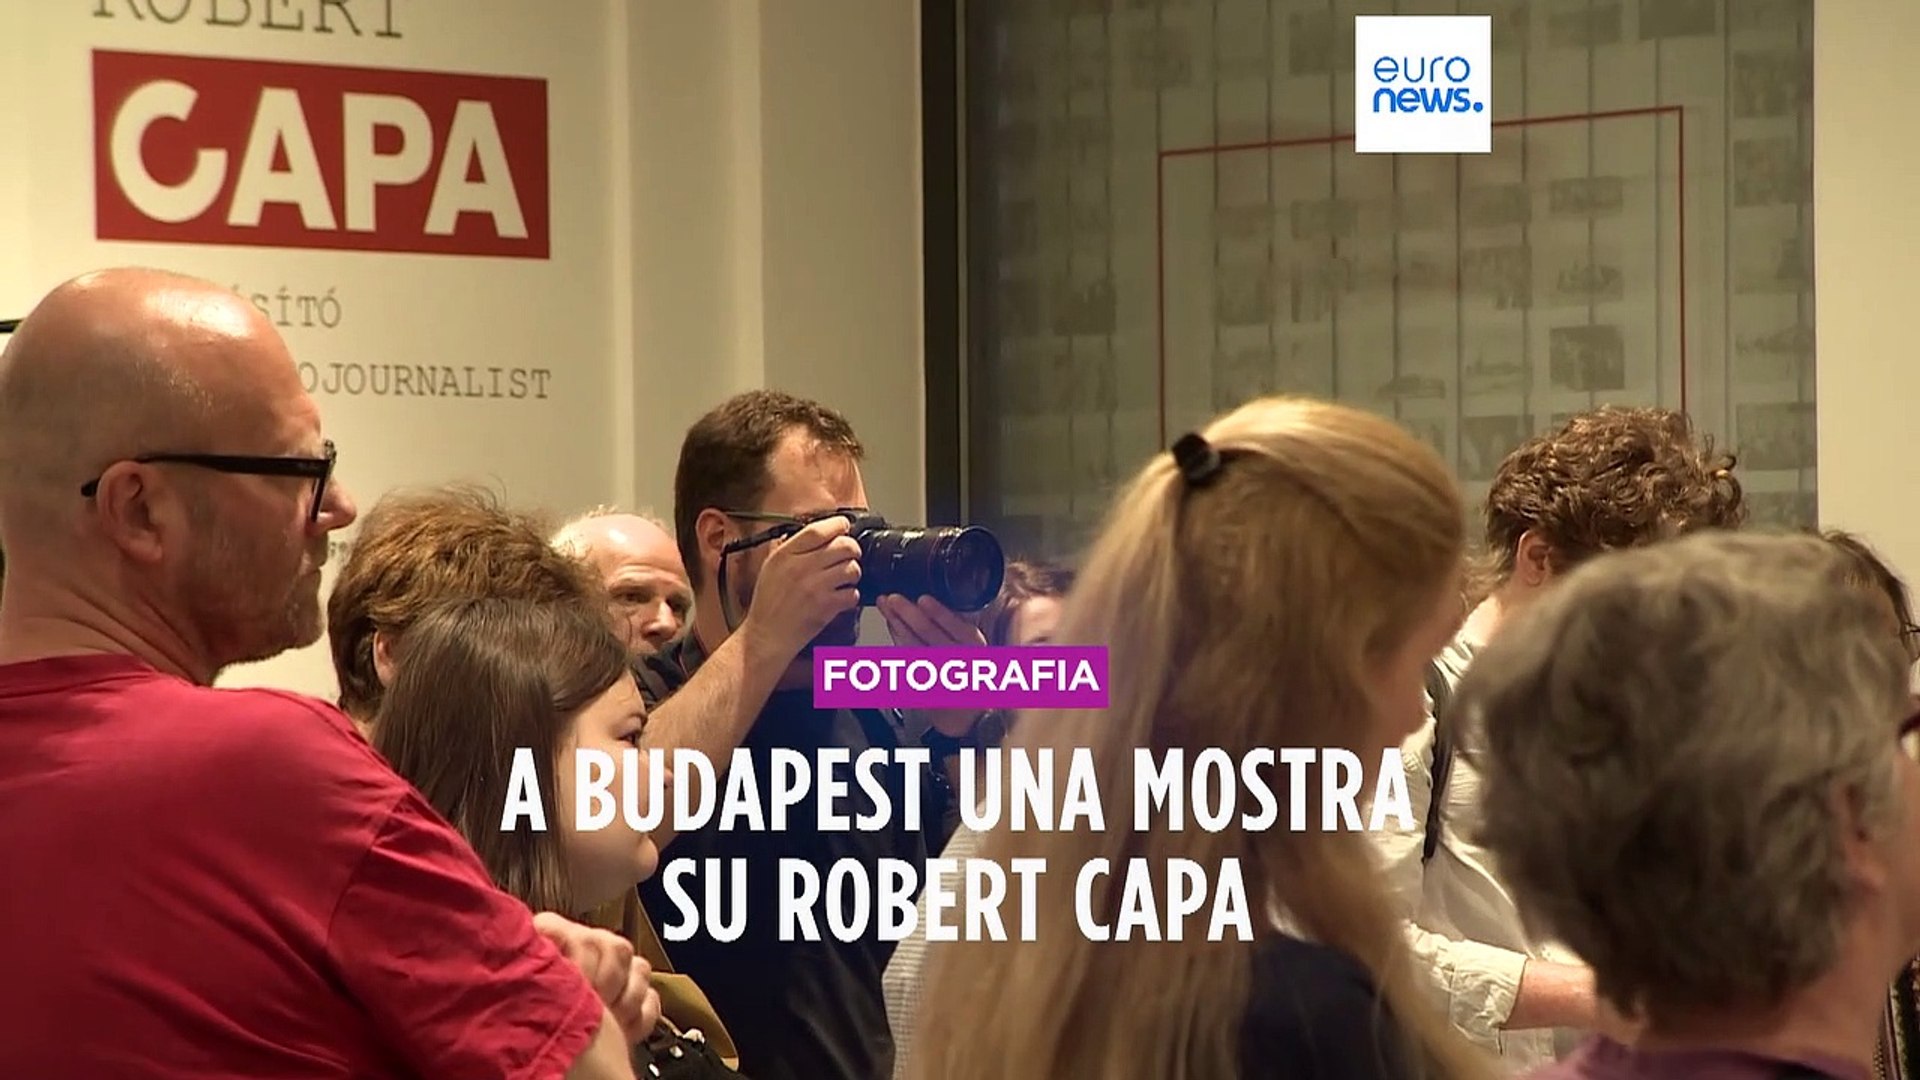 Budapest, un museo sul fotoreporter Robert Capa - Video Dailymotion